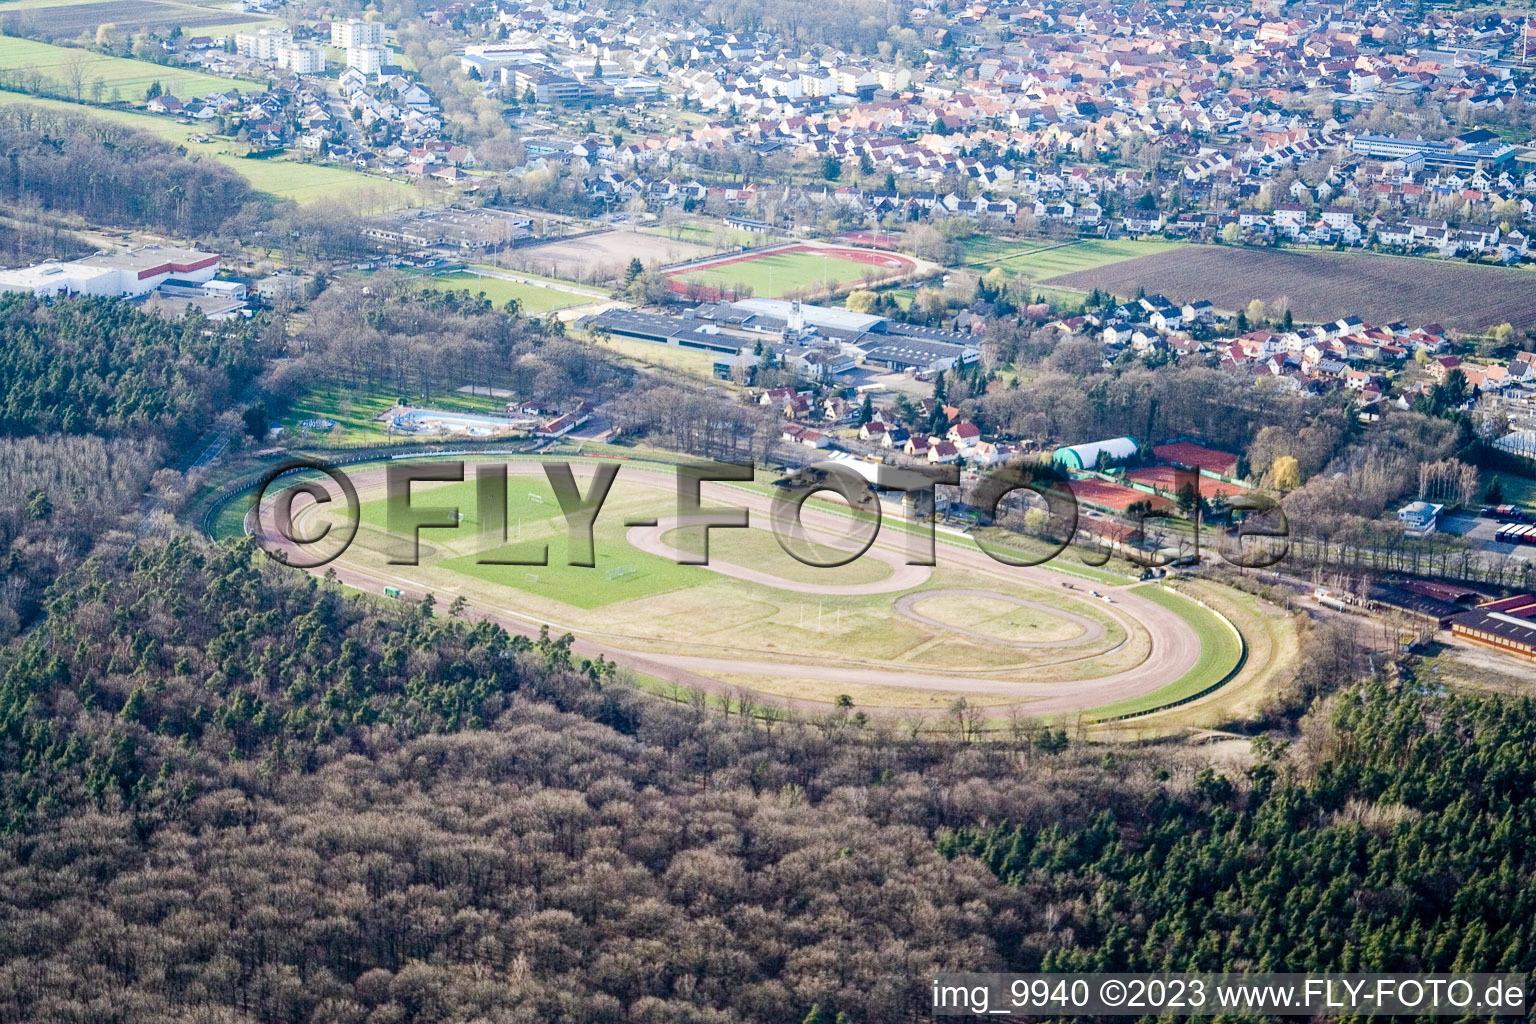 Oblique view of Racetrack in the district Herxheim in Herxheim bei Landau/Pfalz in the state Rhineland-Palatinate, Germany